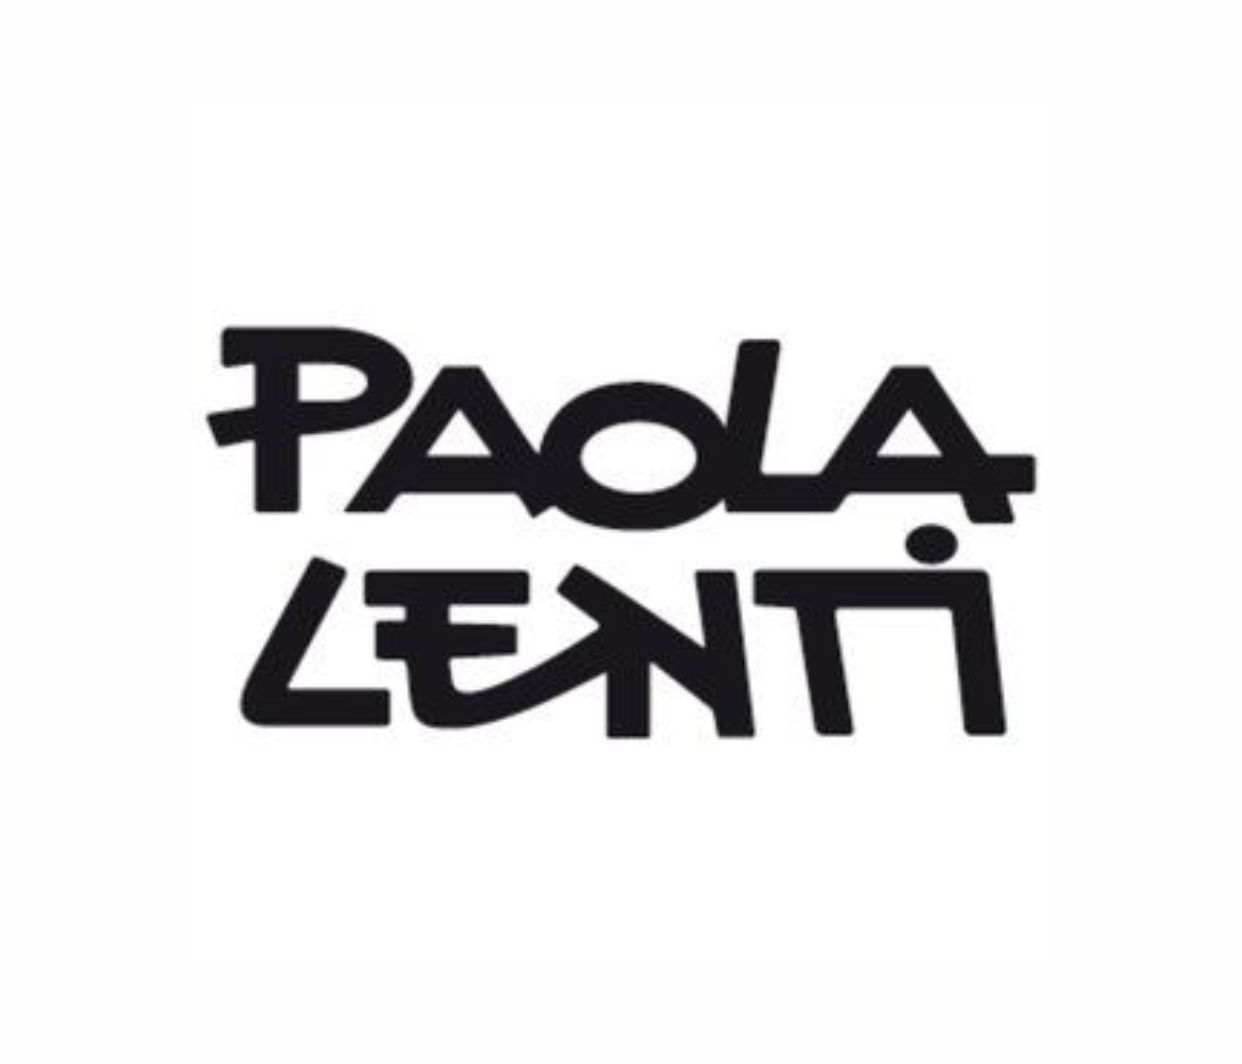 Paola Lenti